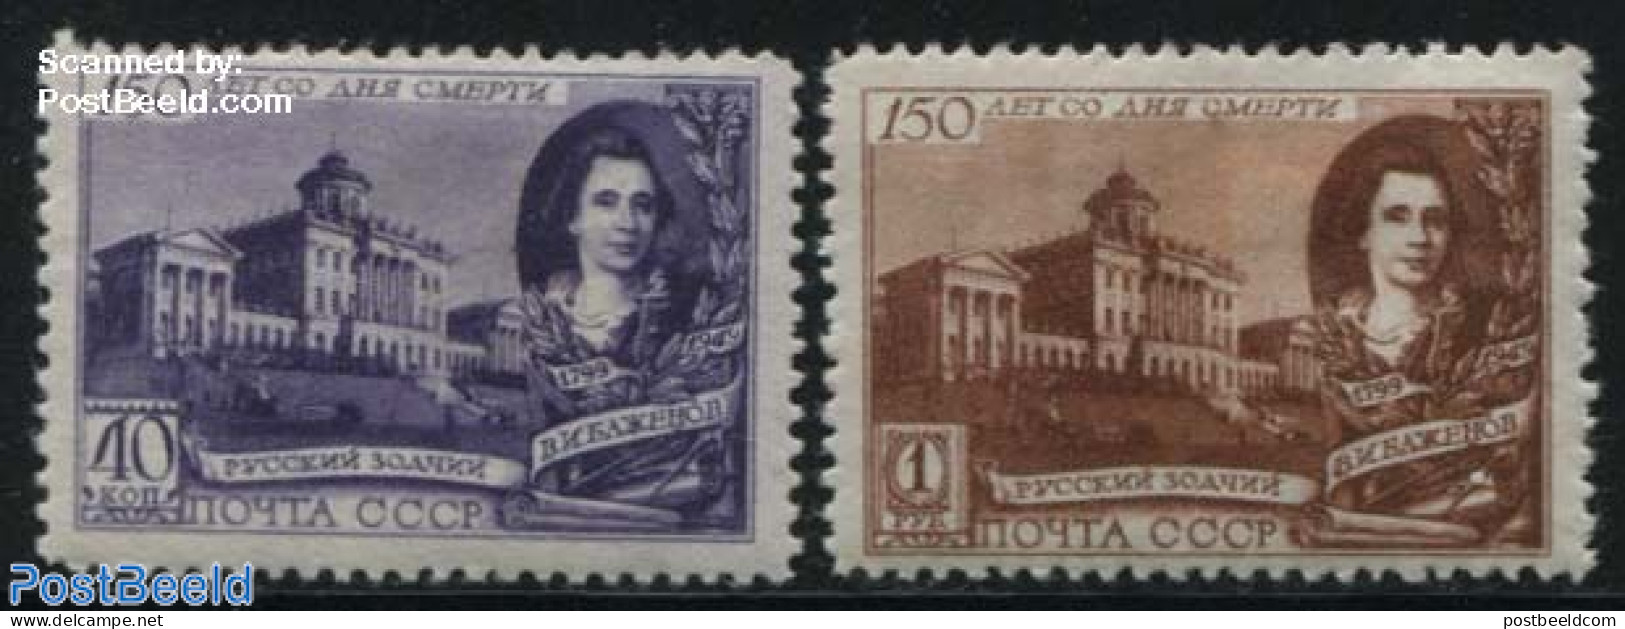 Russia, Soviet Union 1949 W.I. Baschenow 2v, Unused (hinged), Art - Architects - Unused Stamps